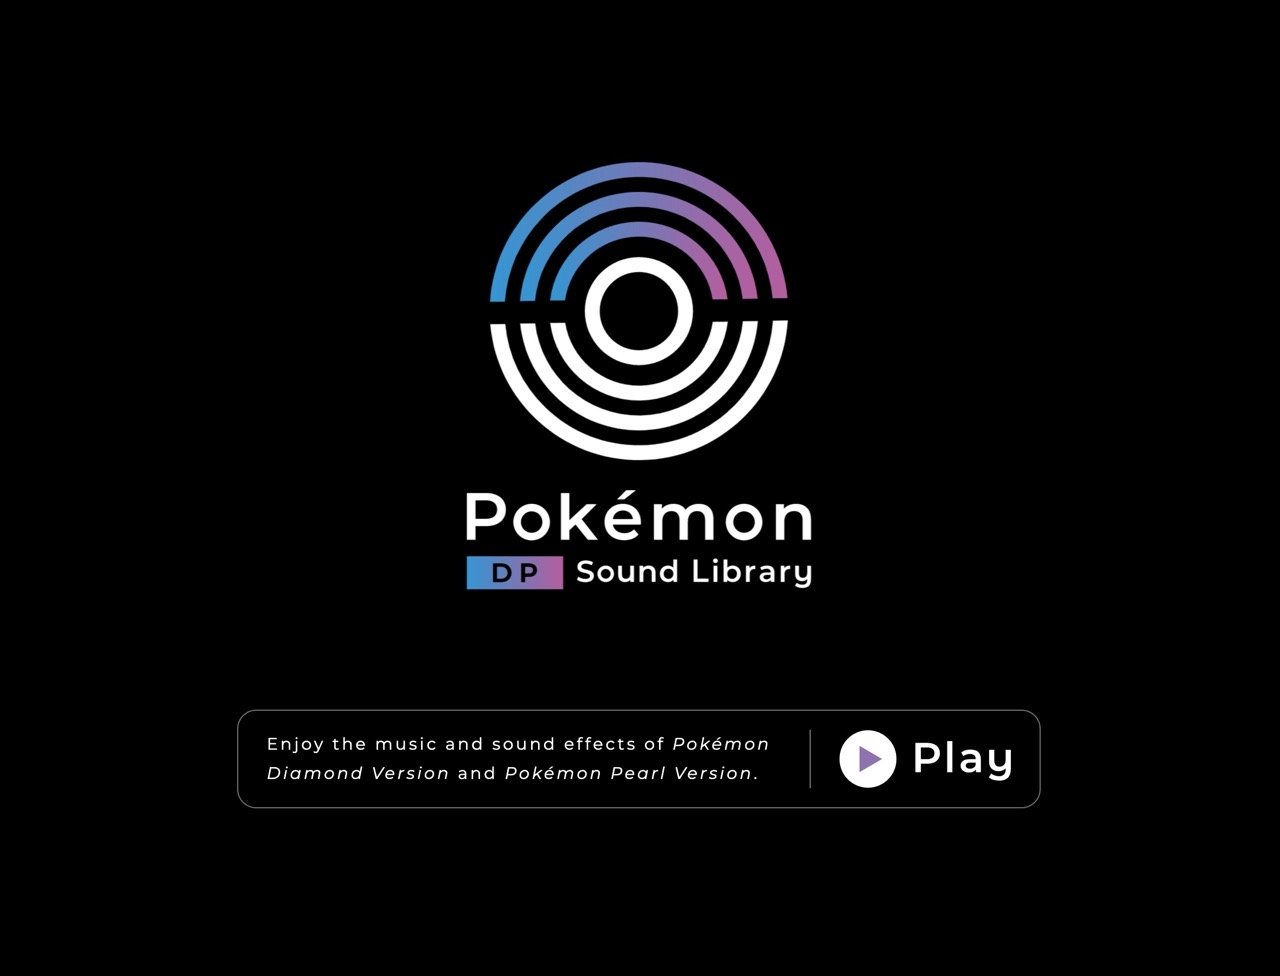 Pokémon DP Sound Library 寶可夢公司釋出鑽石、珍珠免費音樂素材下載